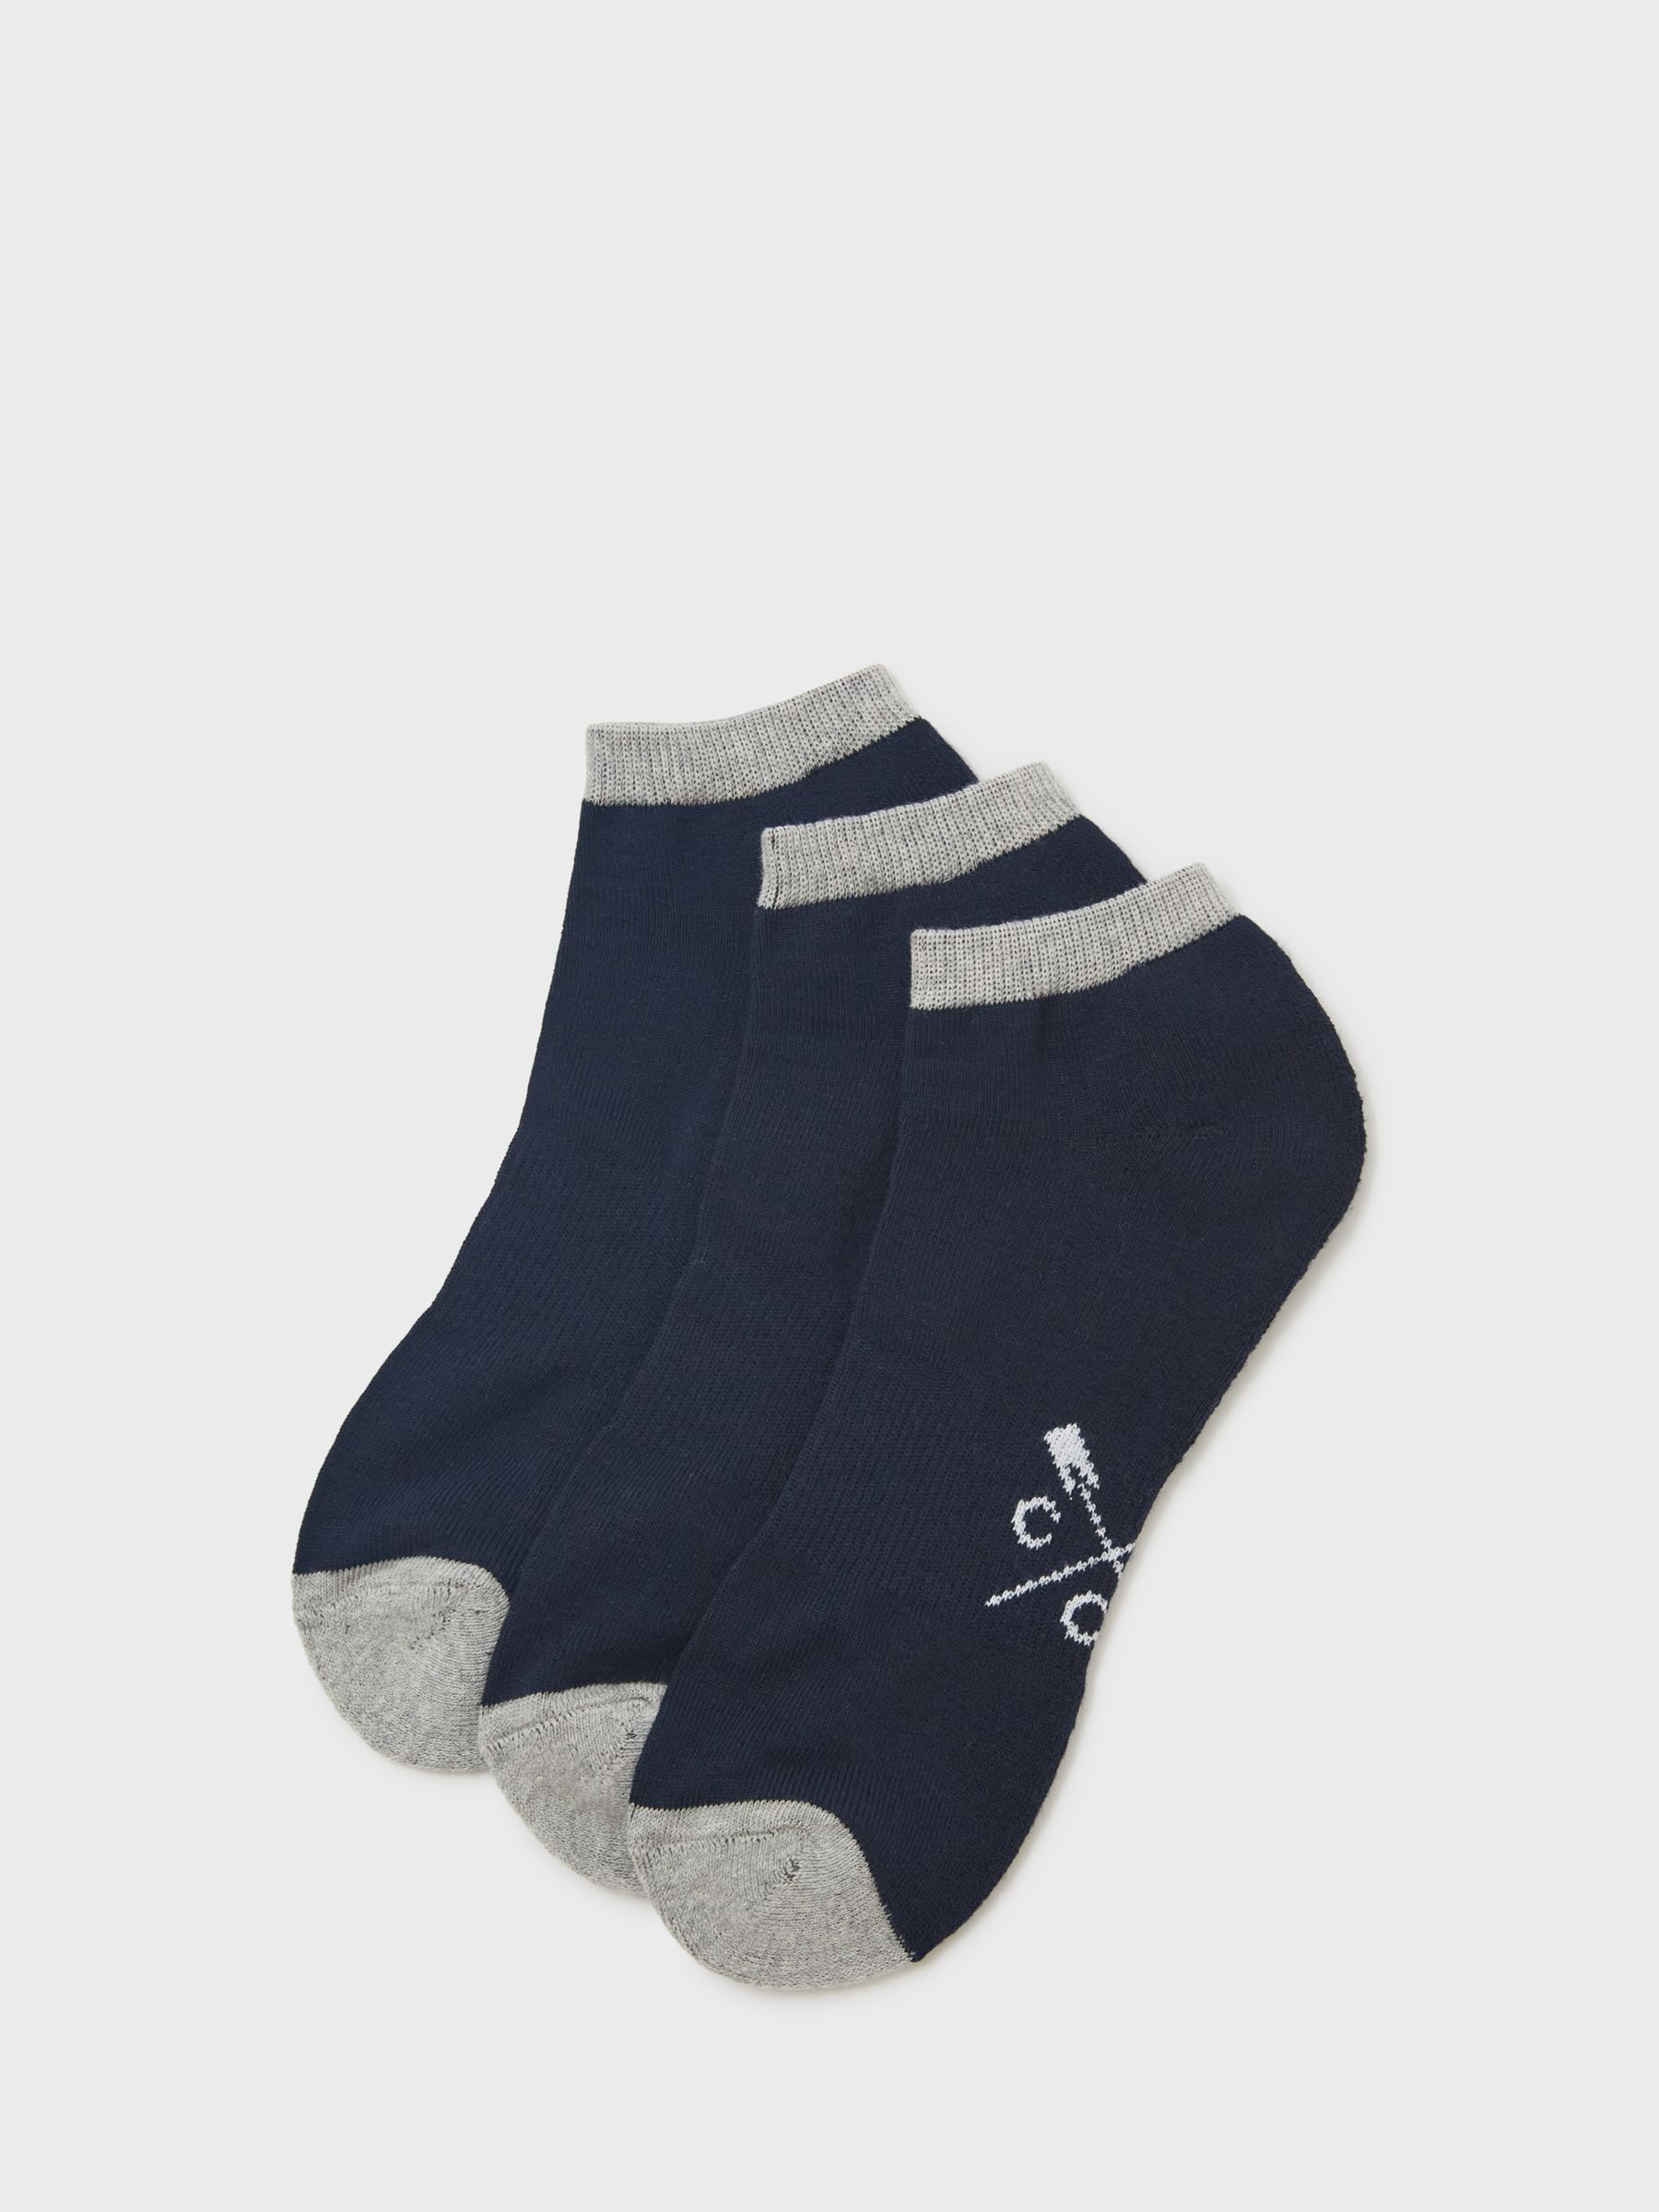 Buy Crew Clothing Bamboo Blend Ankle Socks, Pack of 3, Dark Blue Online at johnlewis.com